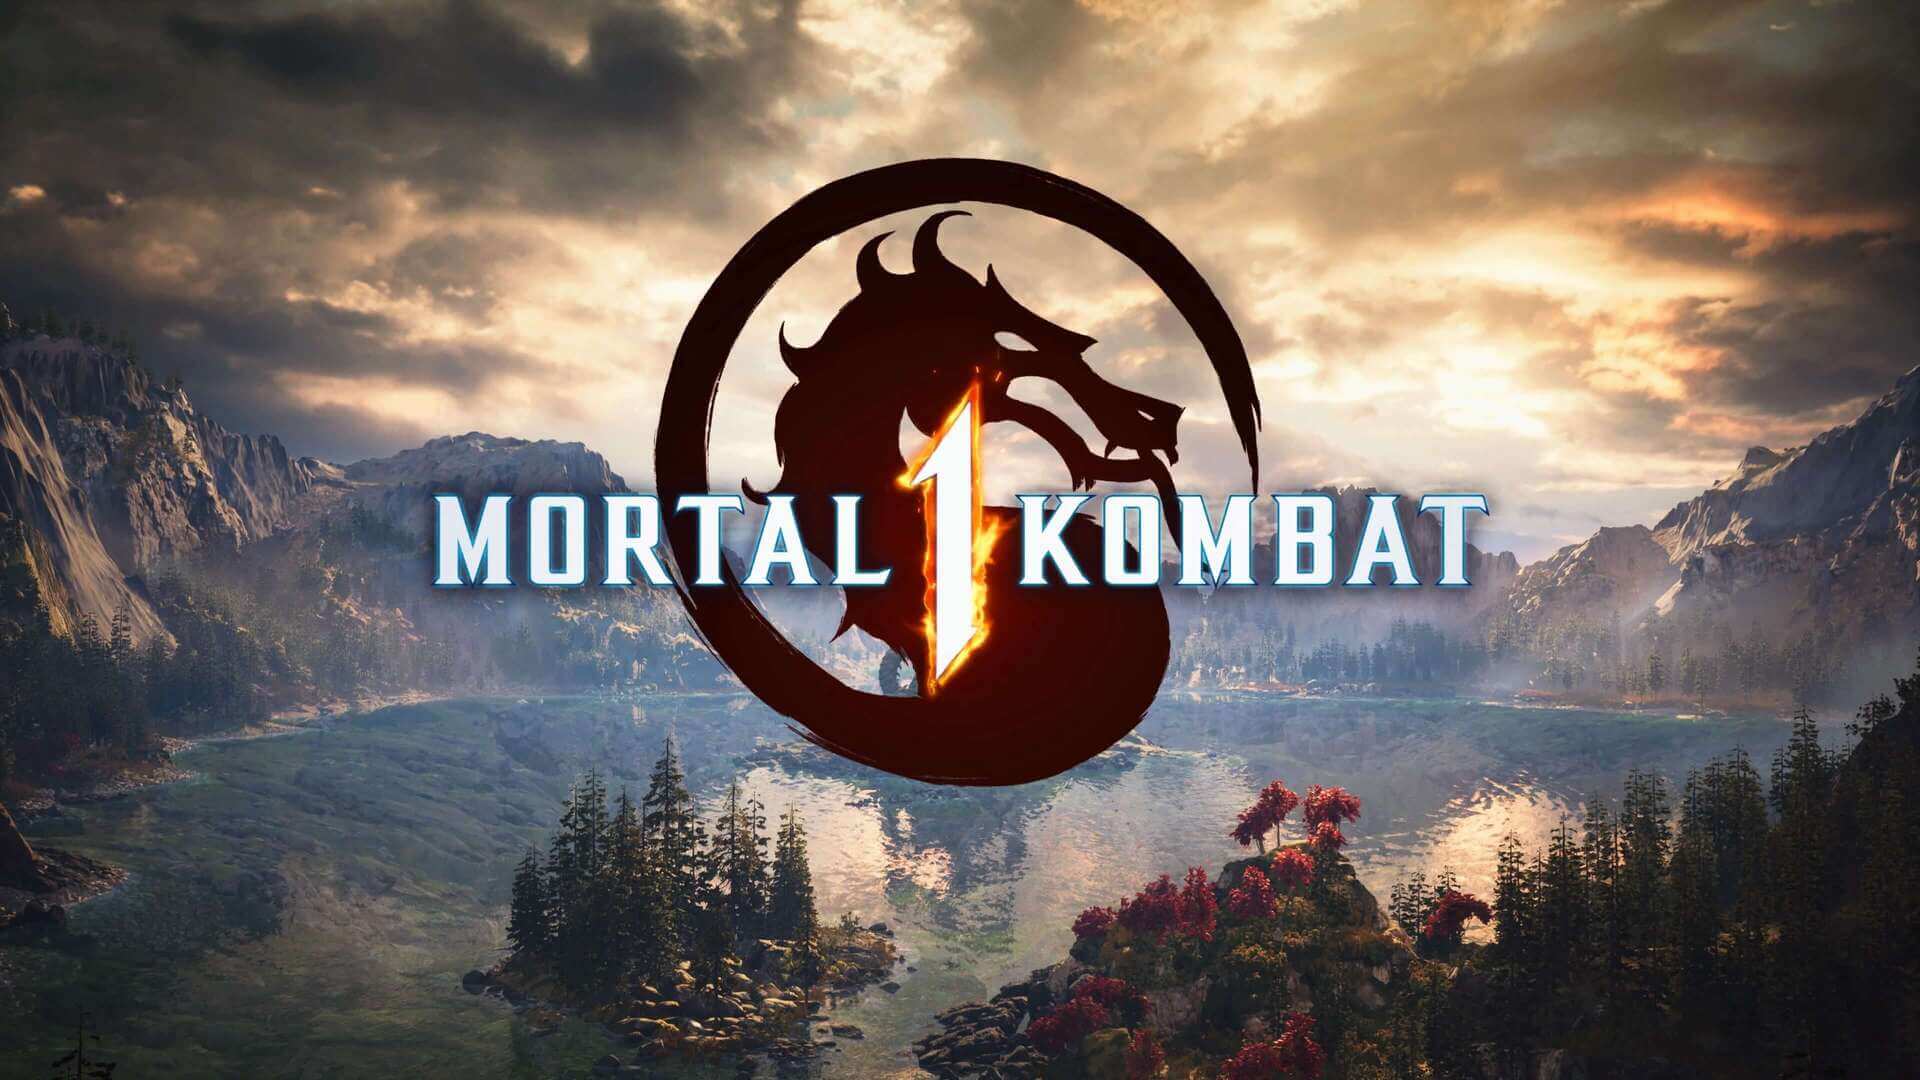 Análise Mortal Kombat 1: delícia até no single player - Delfos